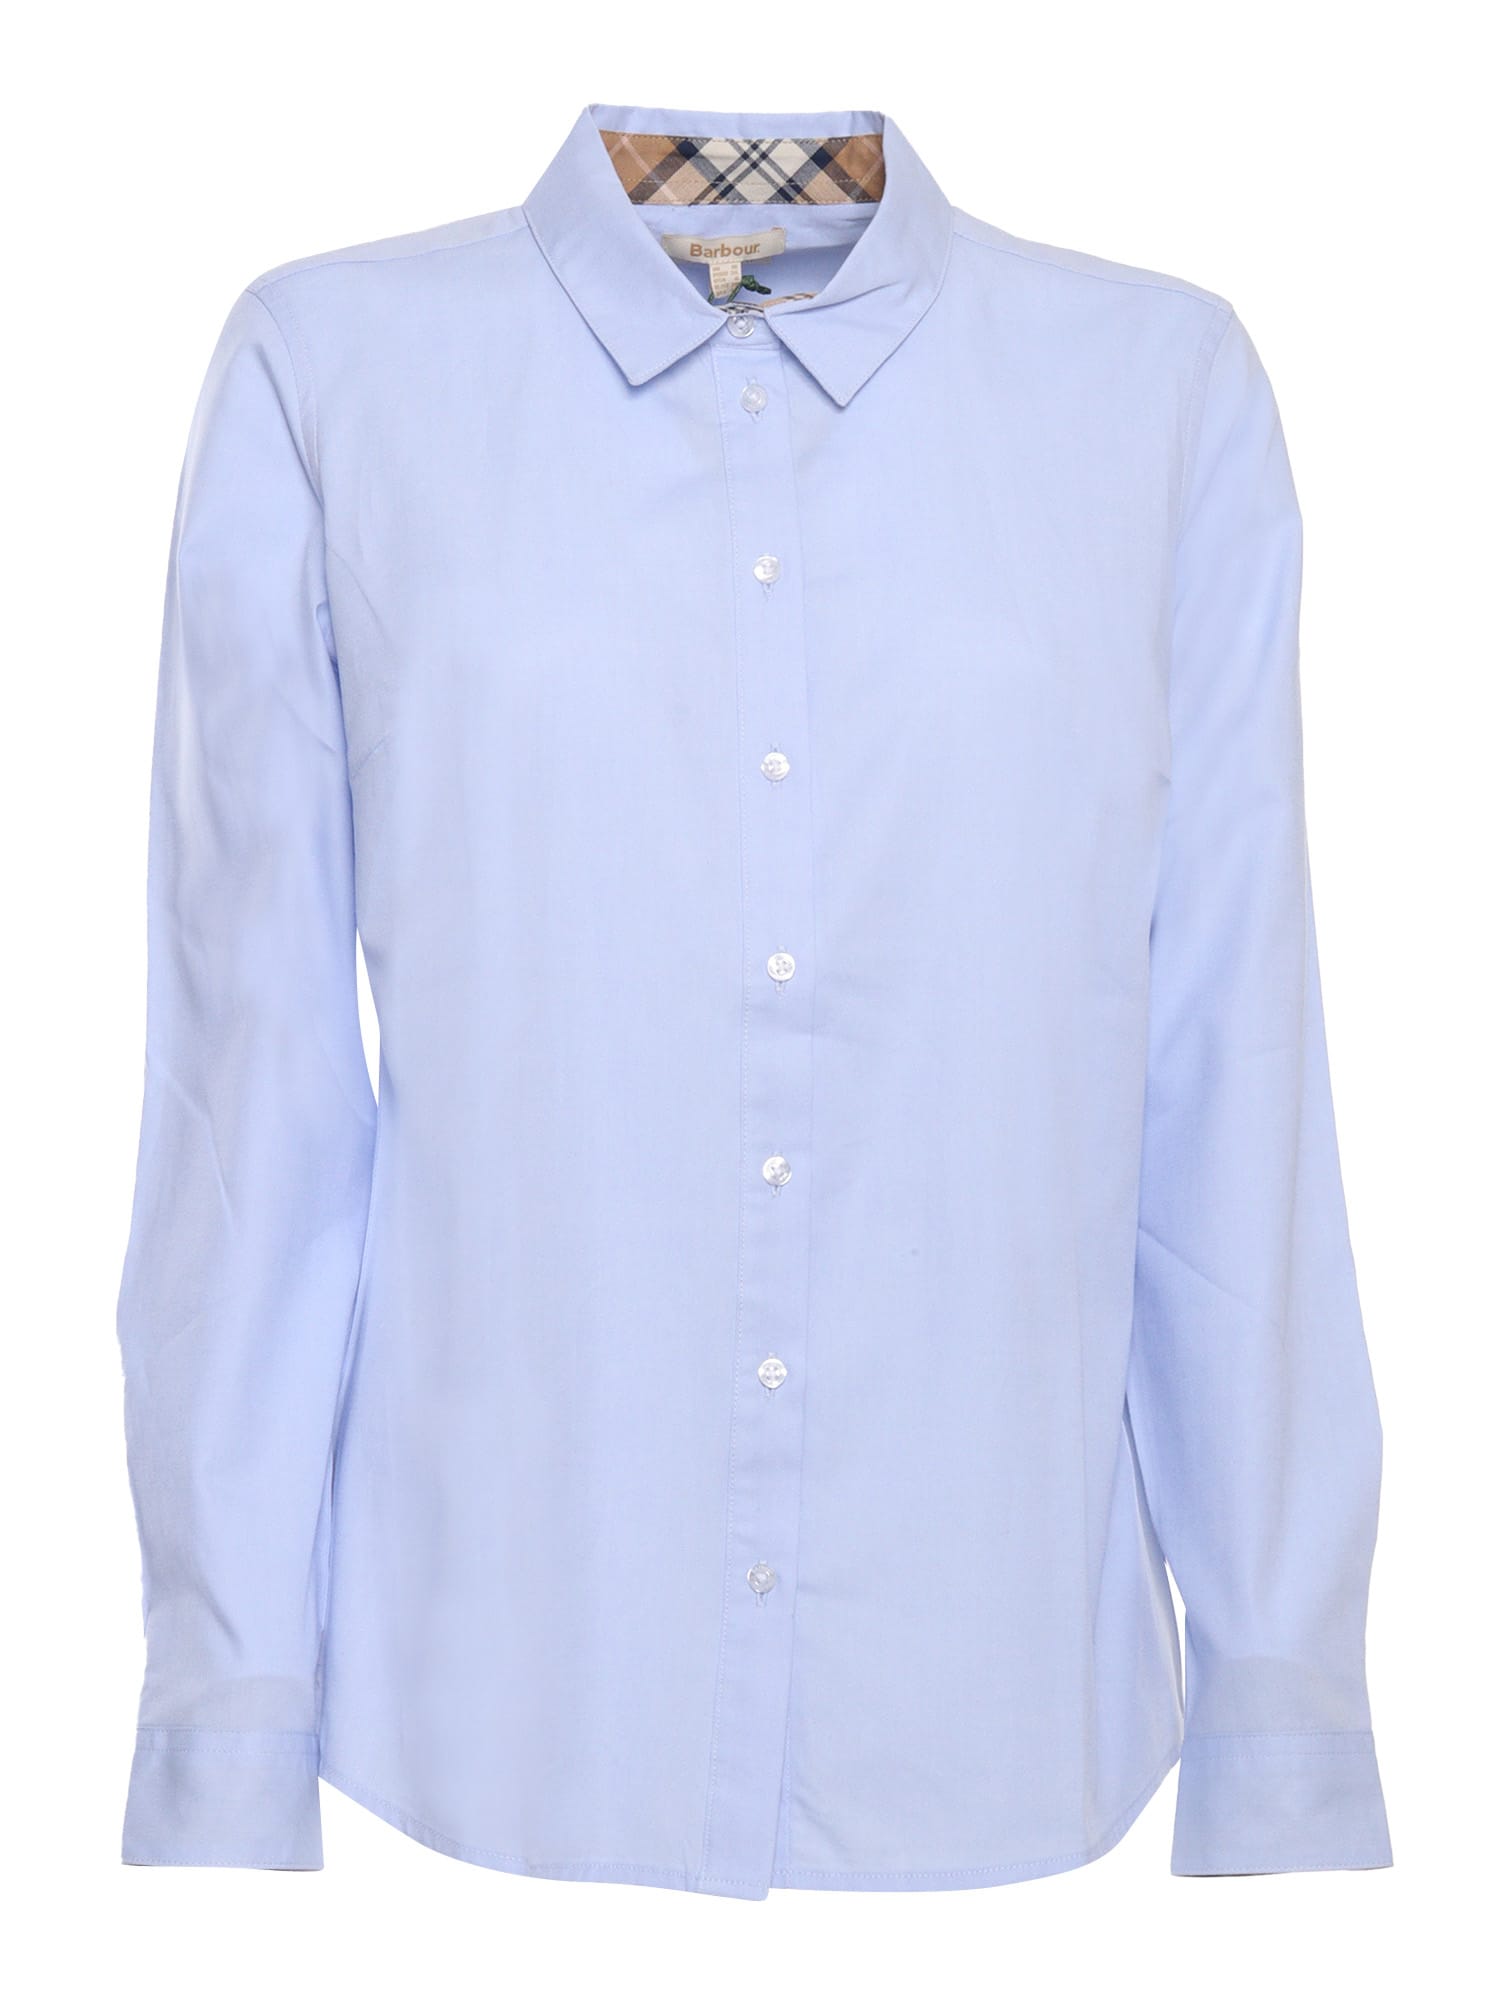 Shop Barbour Light Blue Shirt